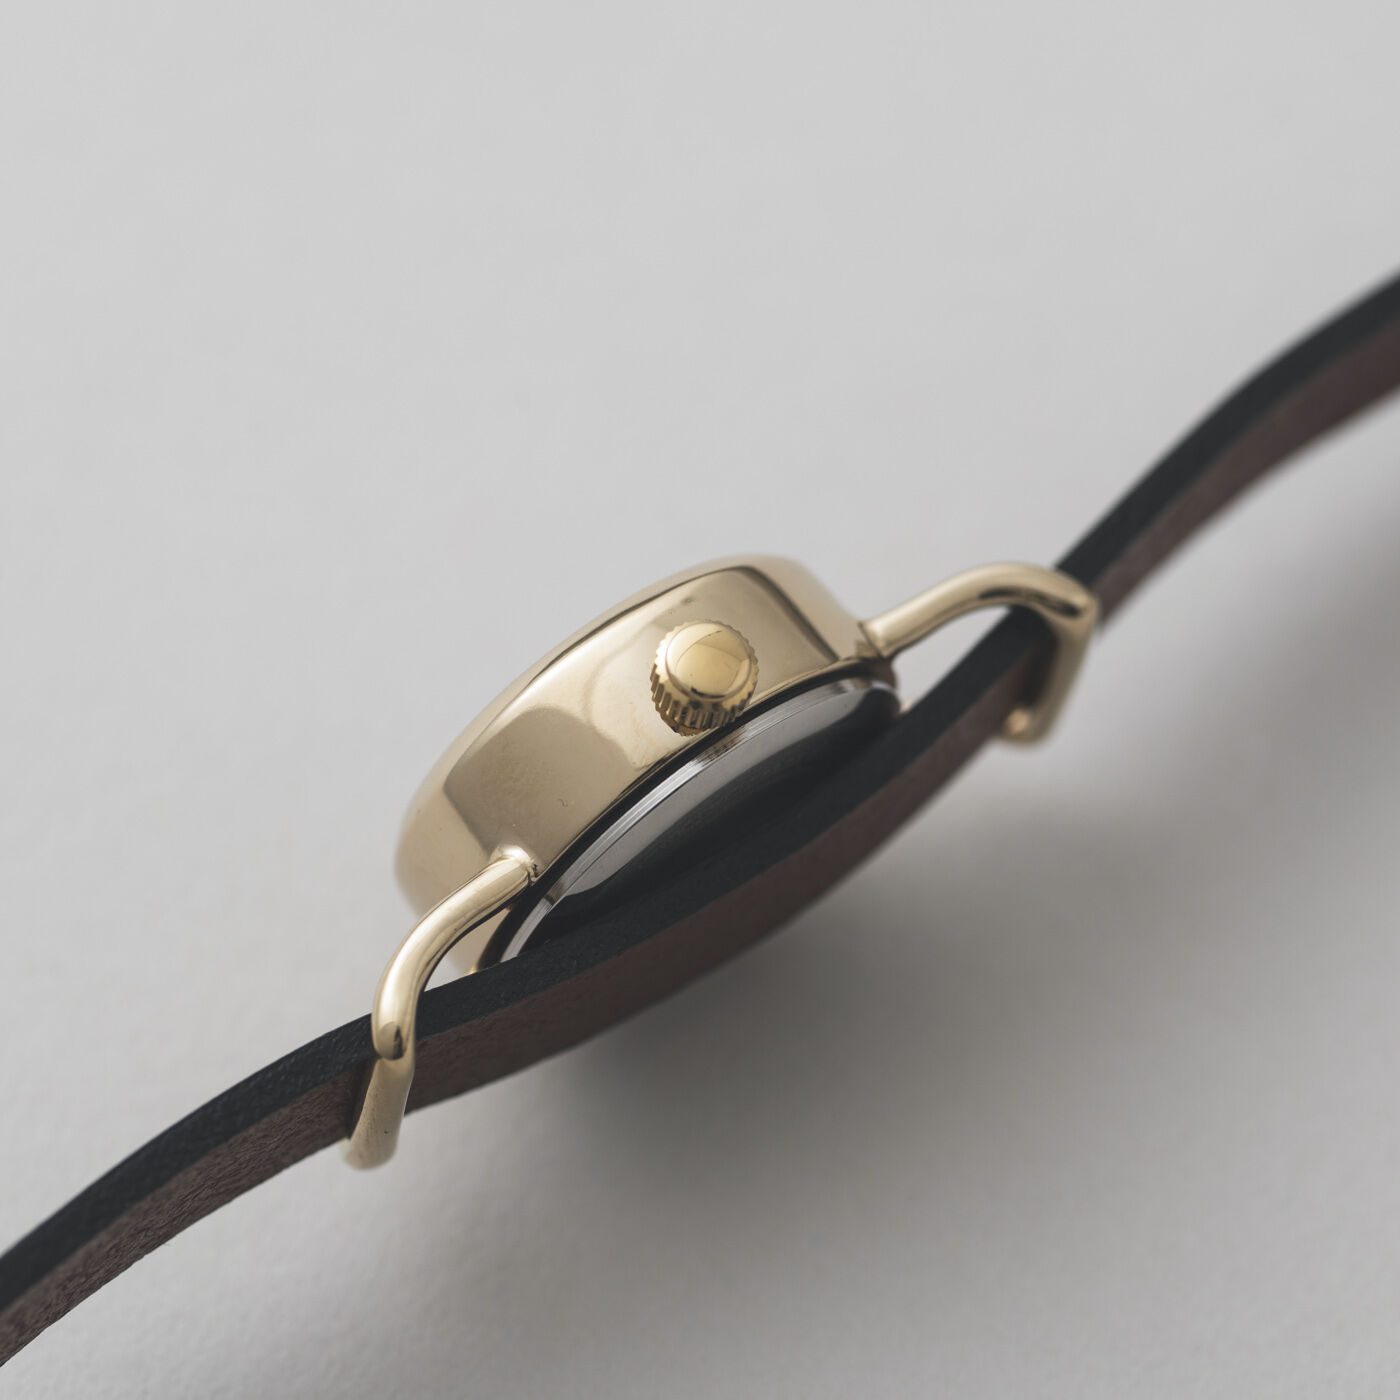 ＆Stories|滋賀の時計職人が手掛けた 神秘のオーロラが美しい 螺鈿（らでん）の腕時計〈マホガニーブラウン〉